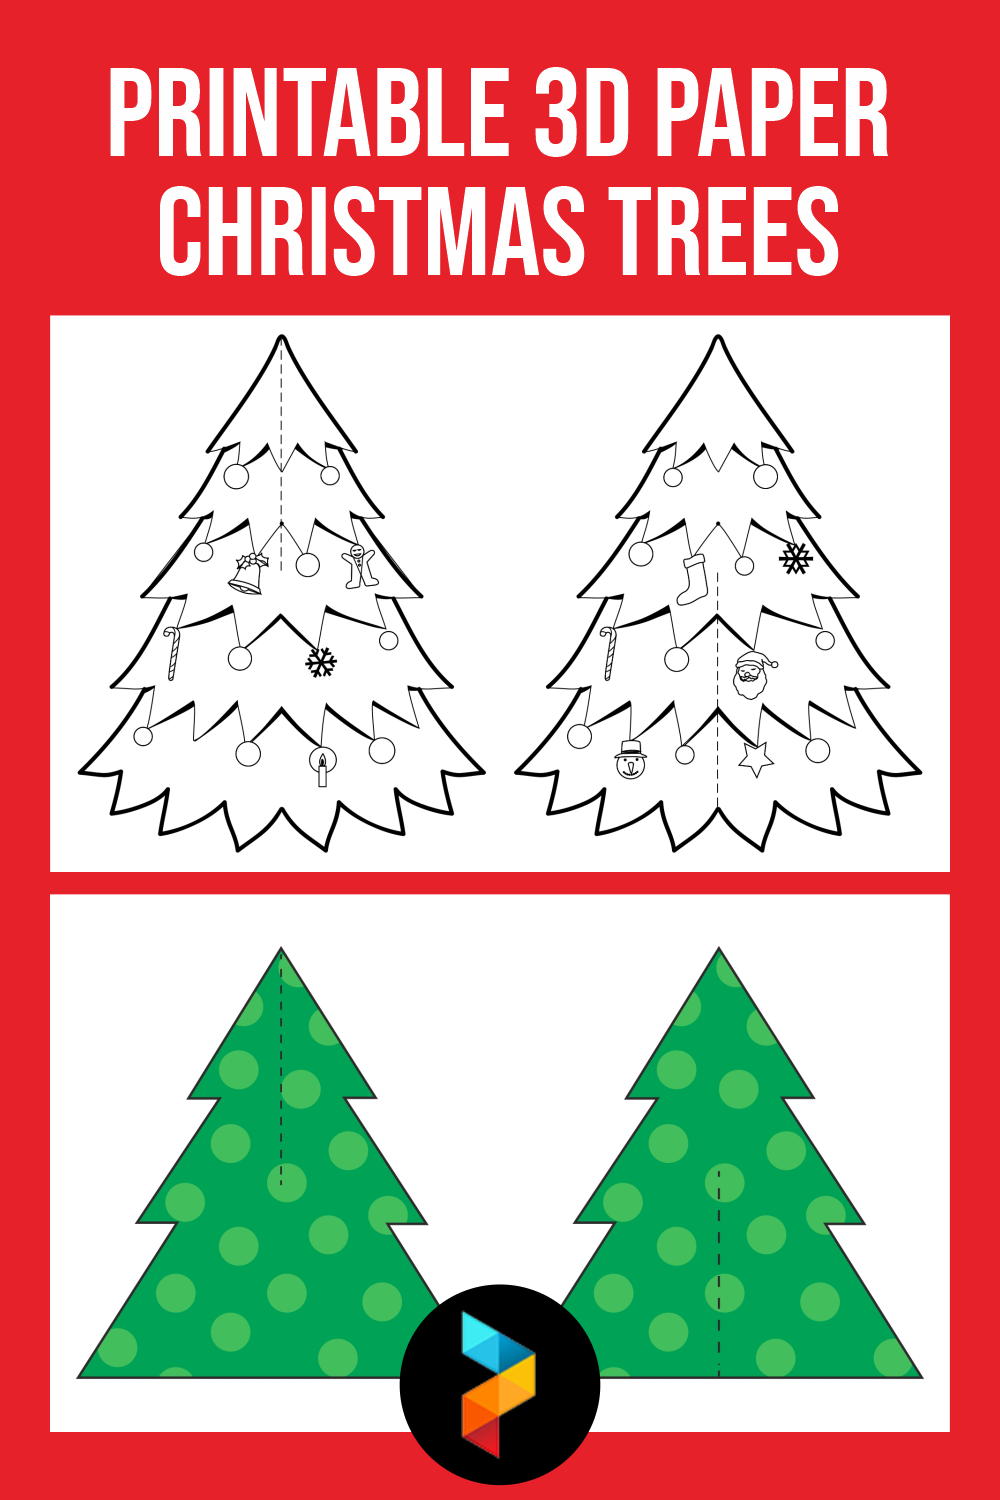 Printable 3D Paper Christmas Trees